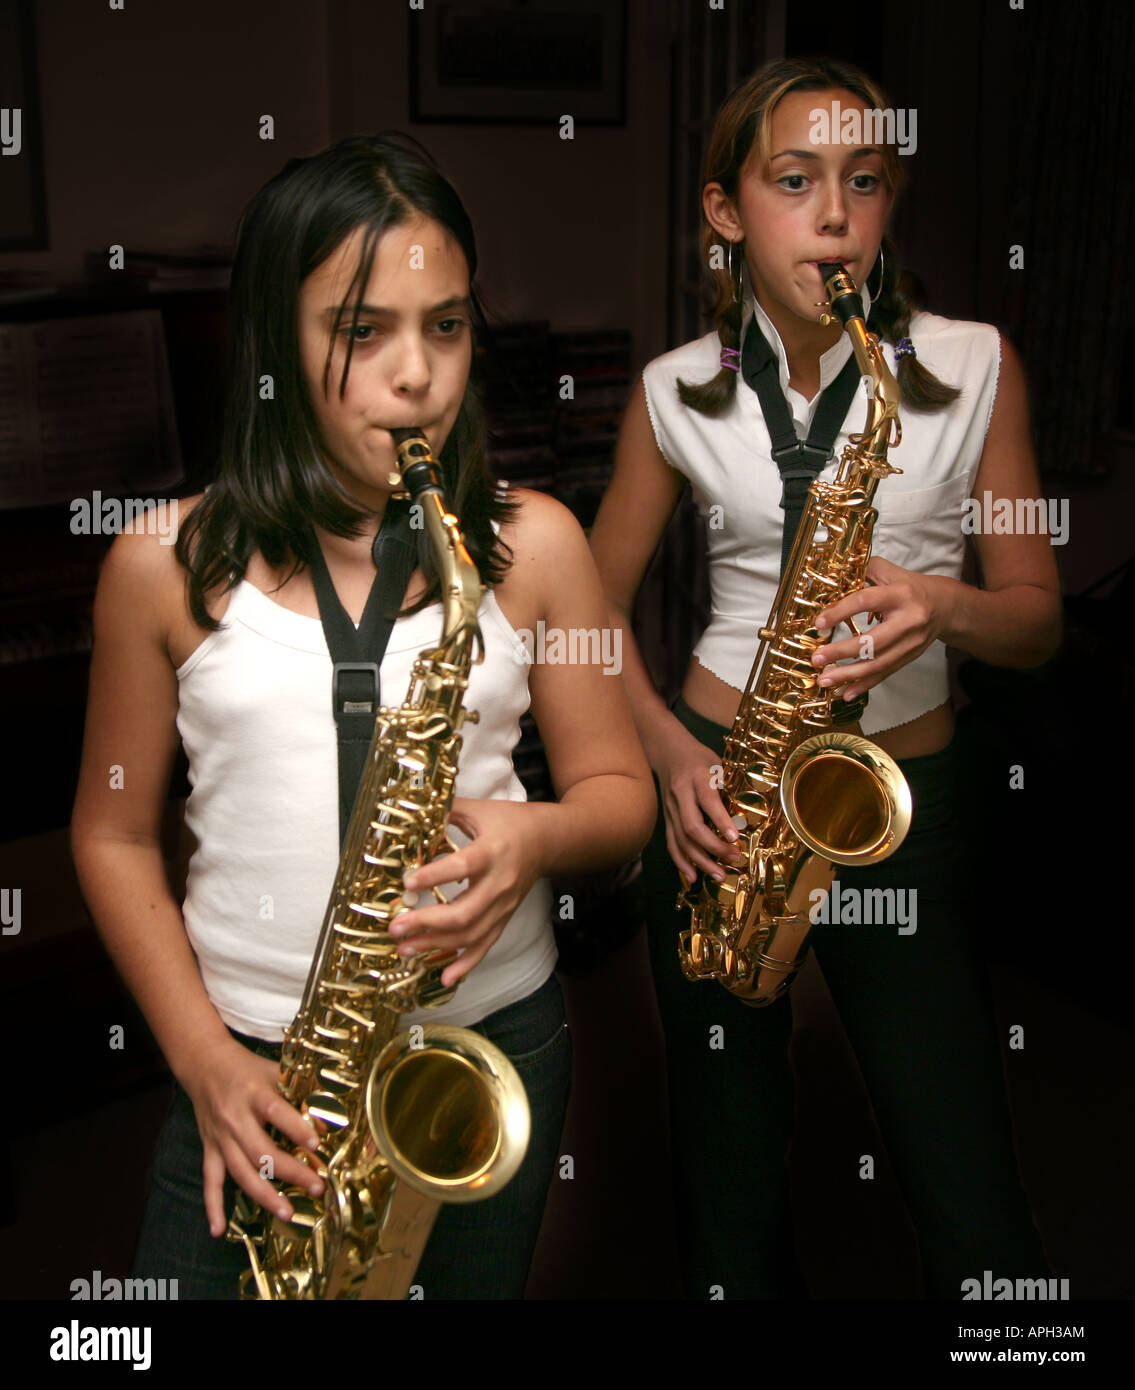 Two girls playing saxophones Stock Photo